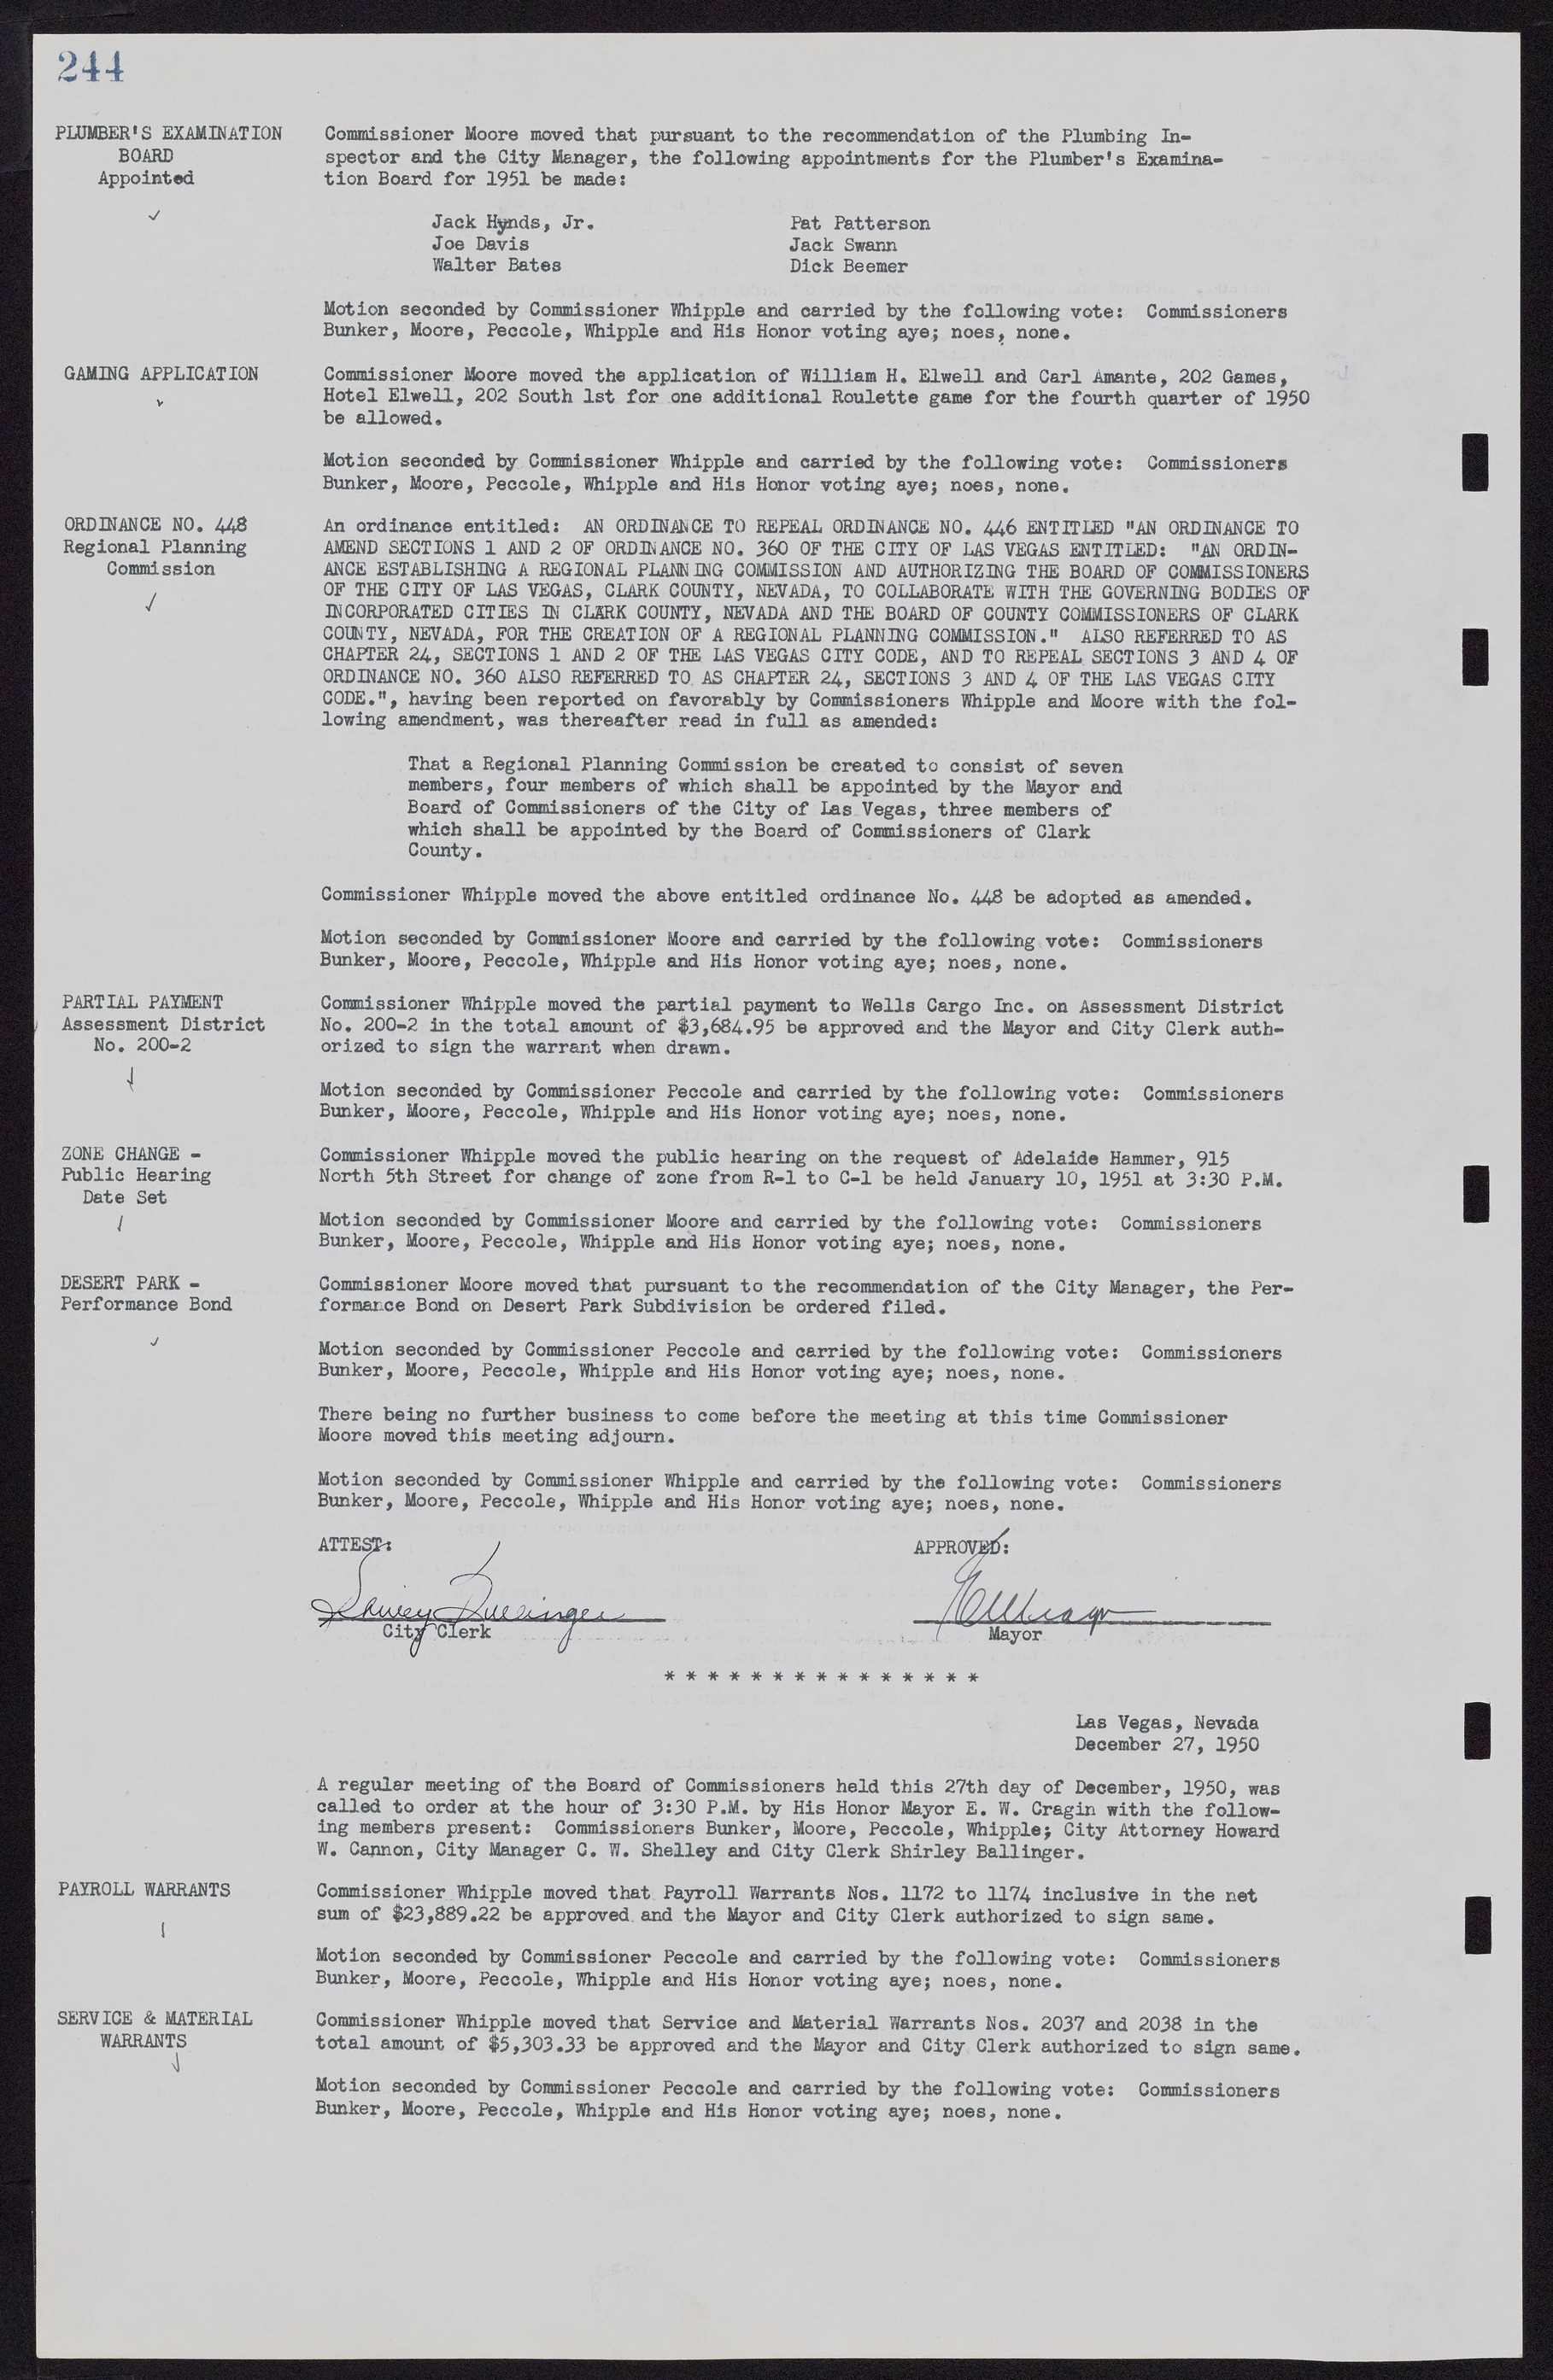 Las Vegas City Commission Minutes, November 7, 1949 to May 21, 1952, lvc000007-254